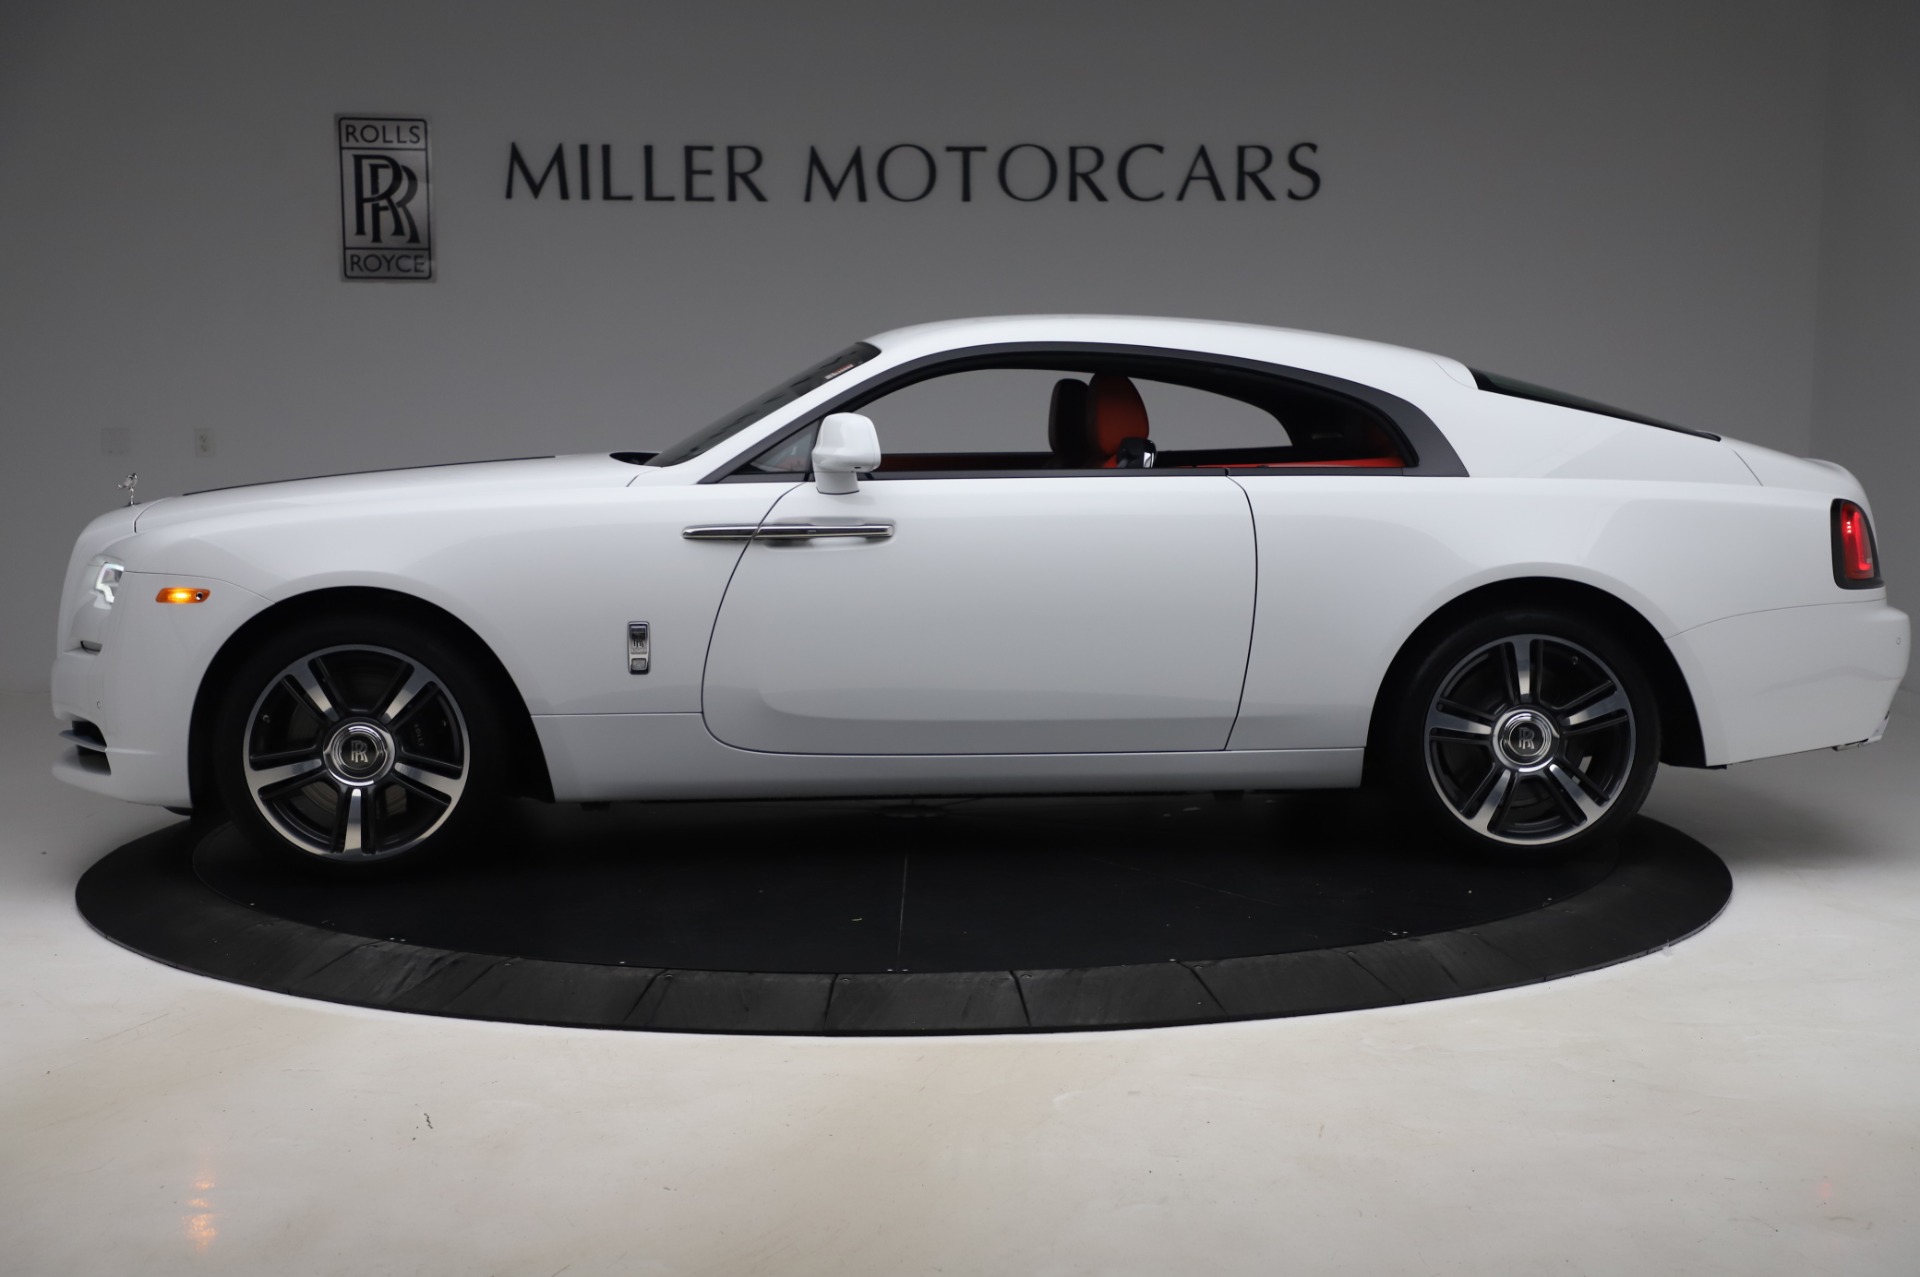 New 2020 Rolls Royce Wraith For Sale 392 325 Miller Motorcars